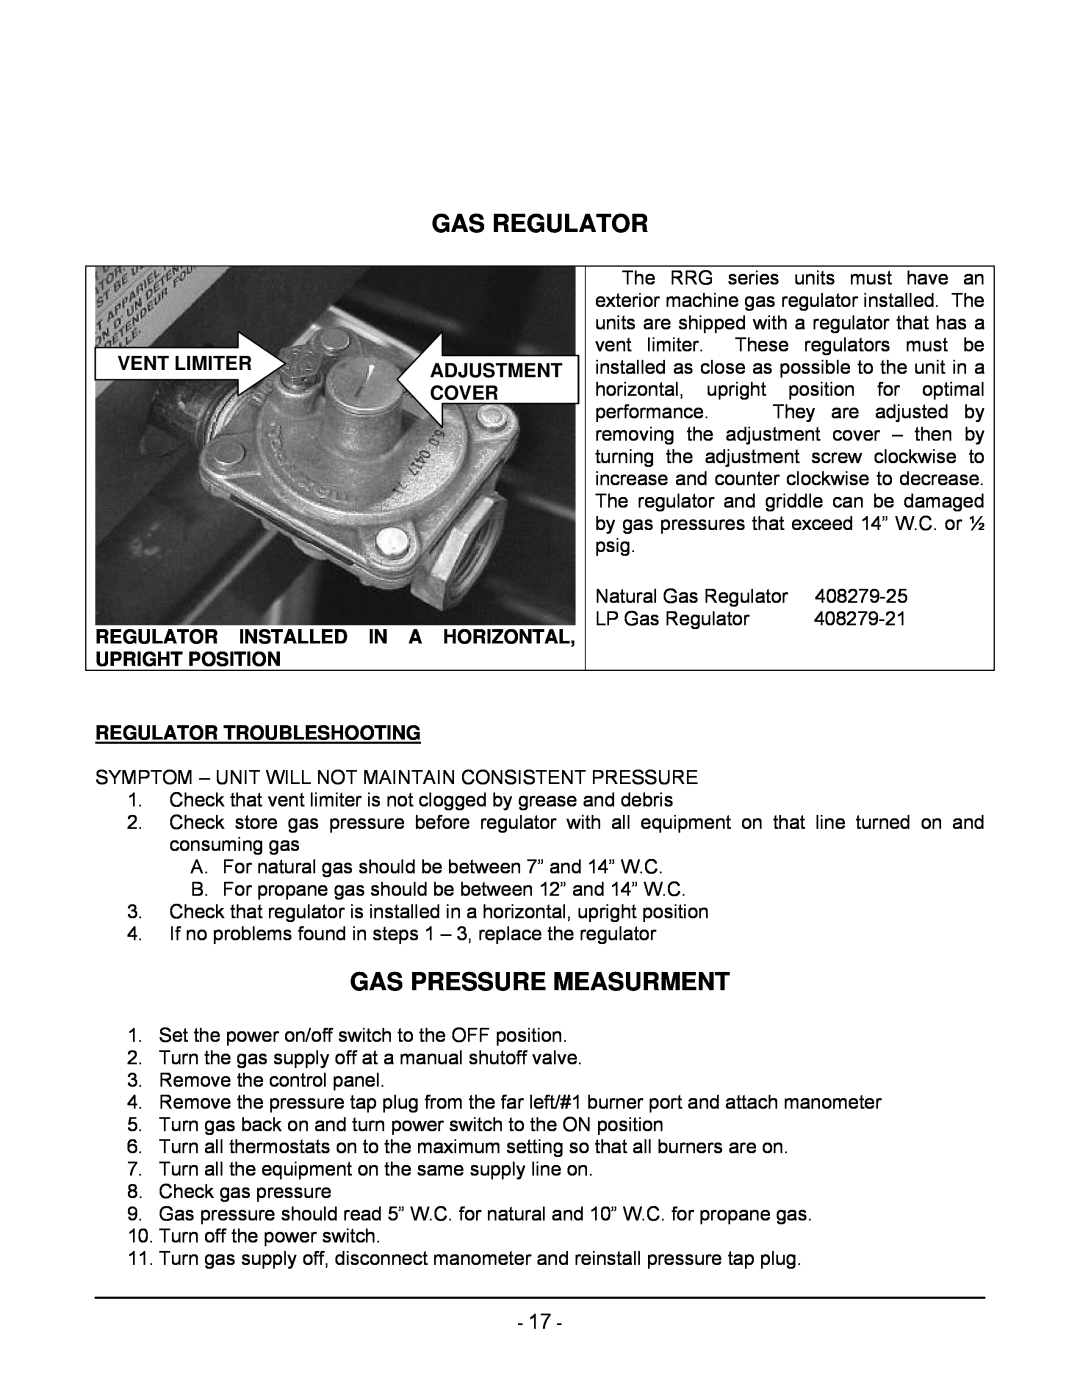 Vulcan-Hart 24RRG, ML-135340-00036 Gas Regulator, Gas Pressure Measurment, Vent Limiter, Cover, Regulator Troubleshooting 